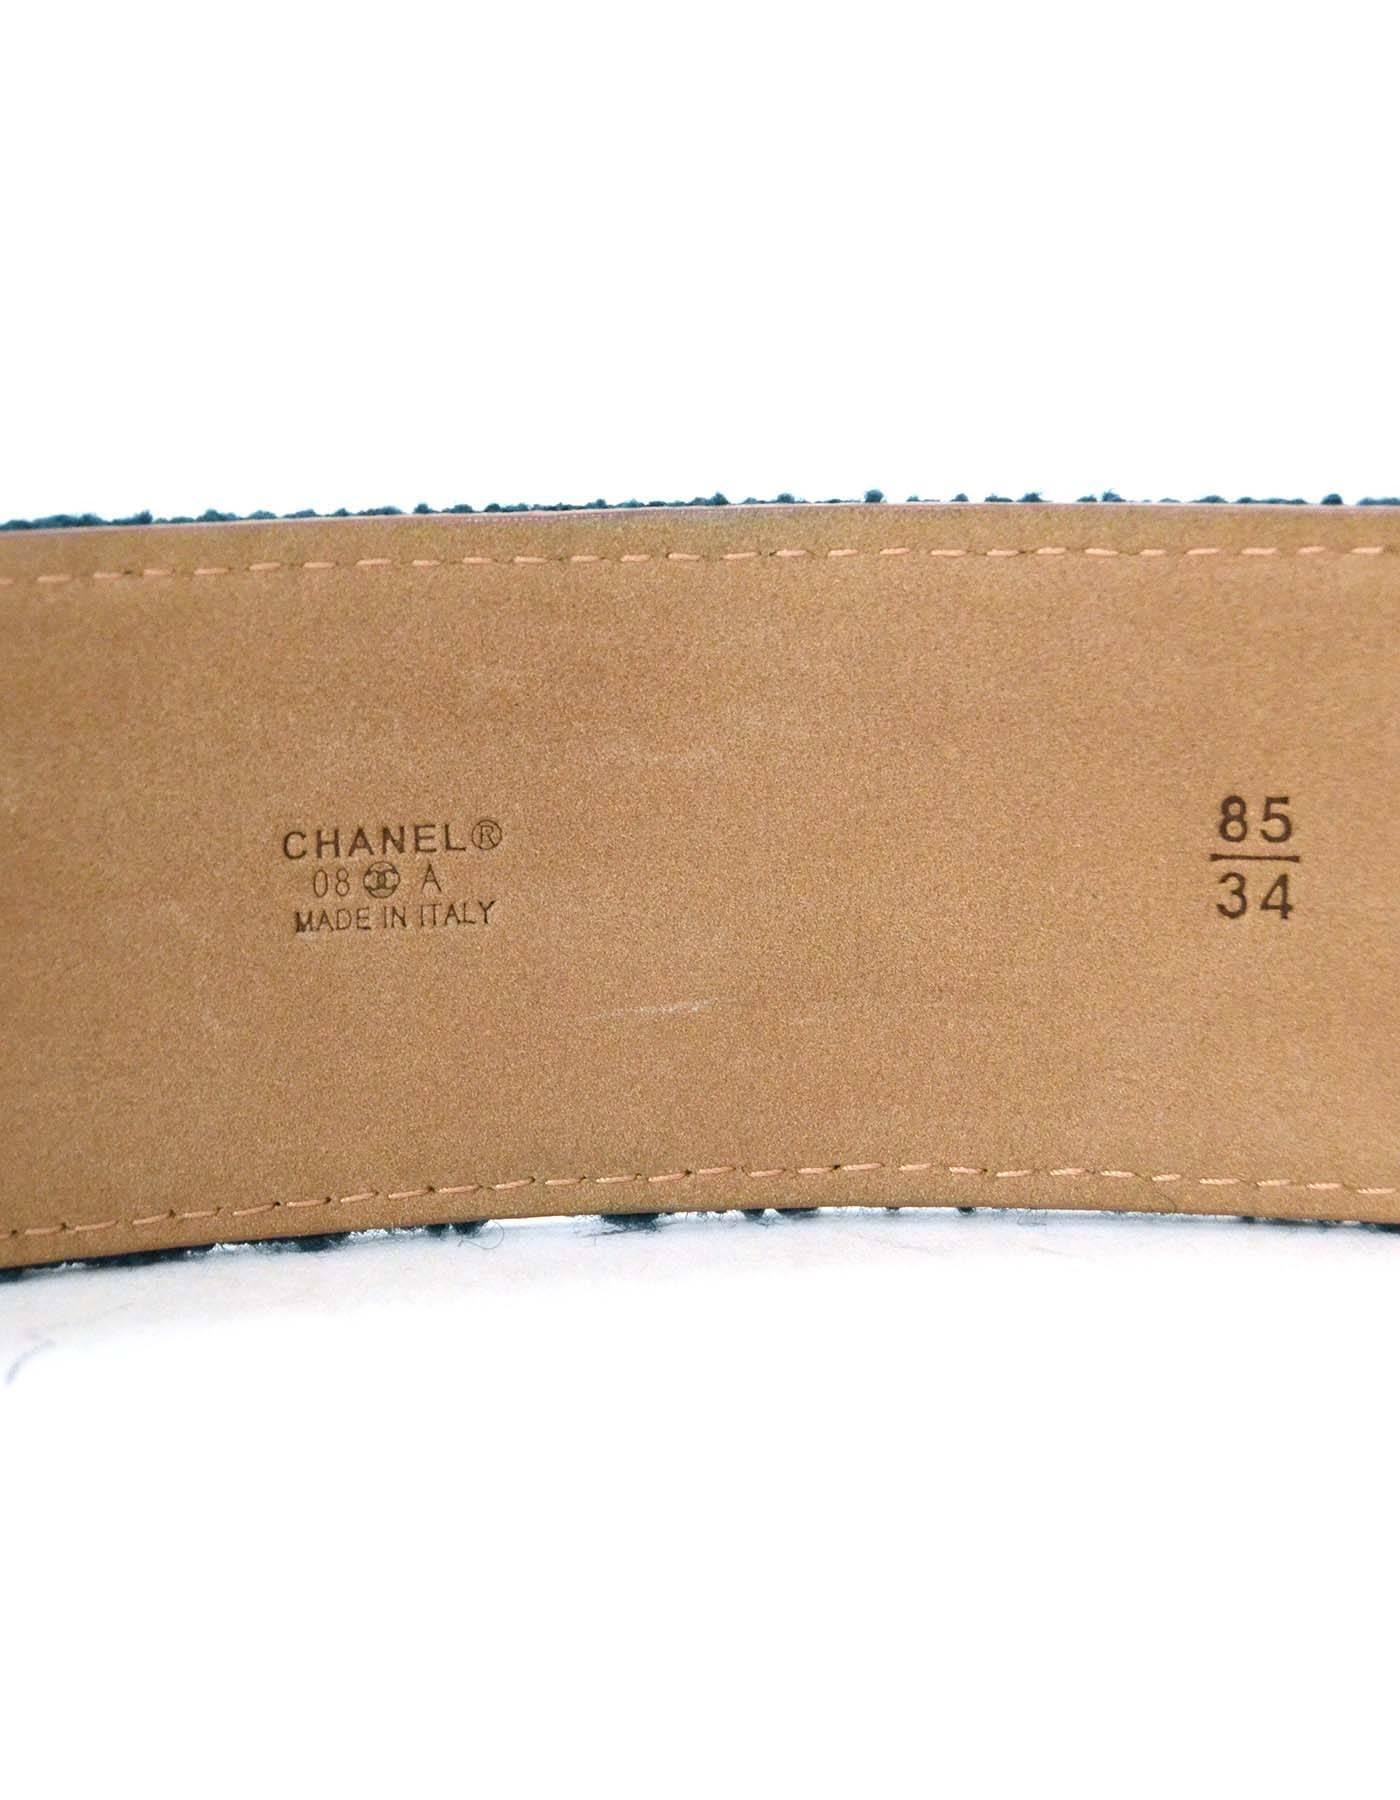 Chanel Teal Tweed CC Belt Sz 85 with Box 1